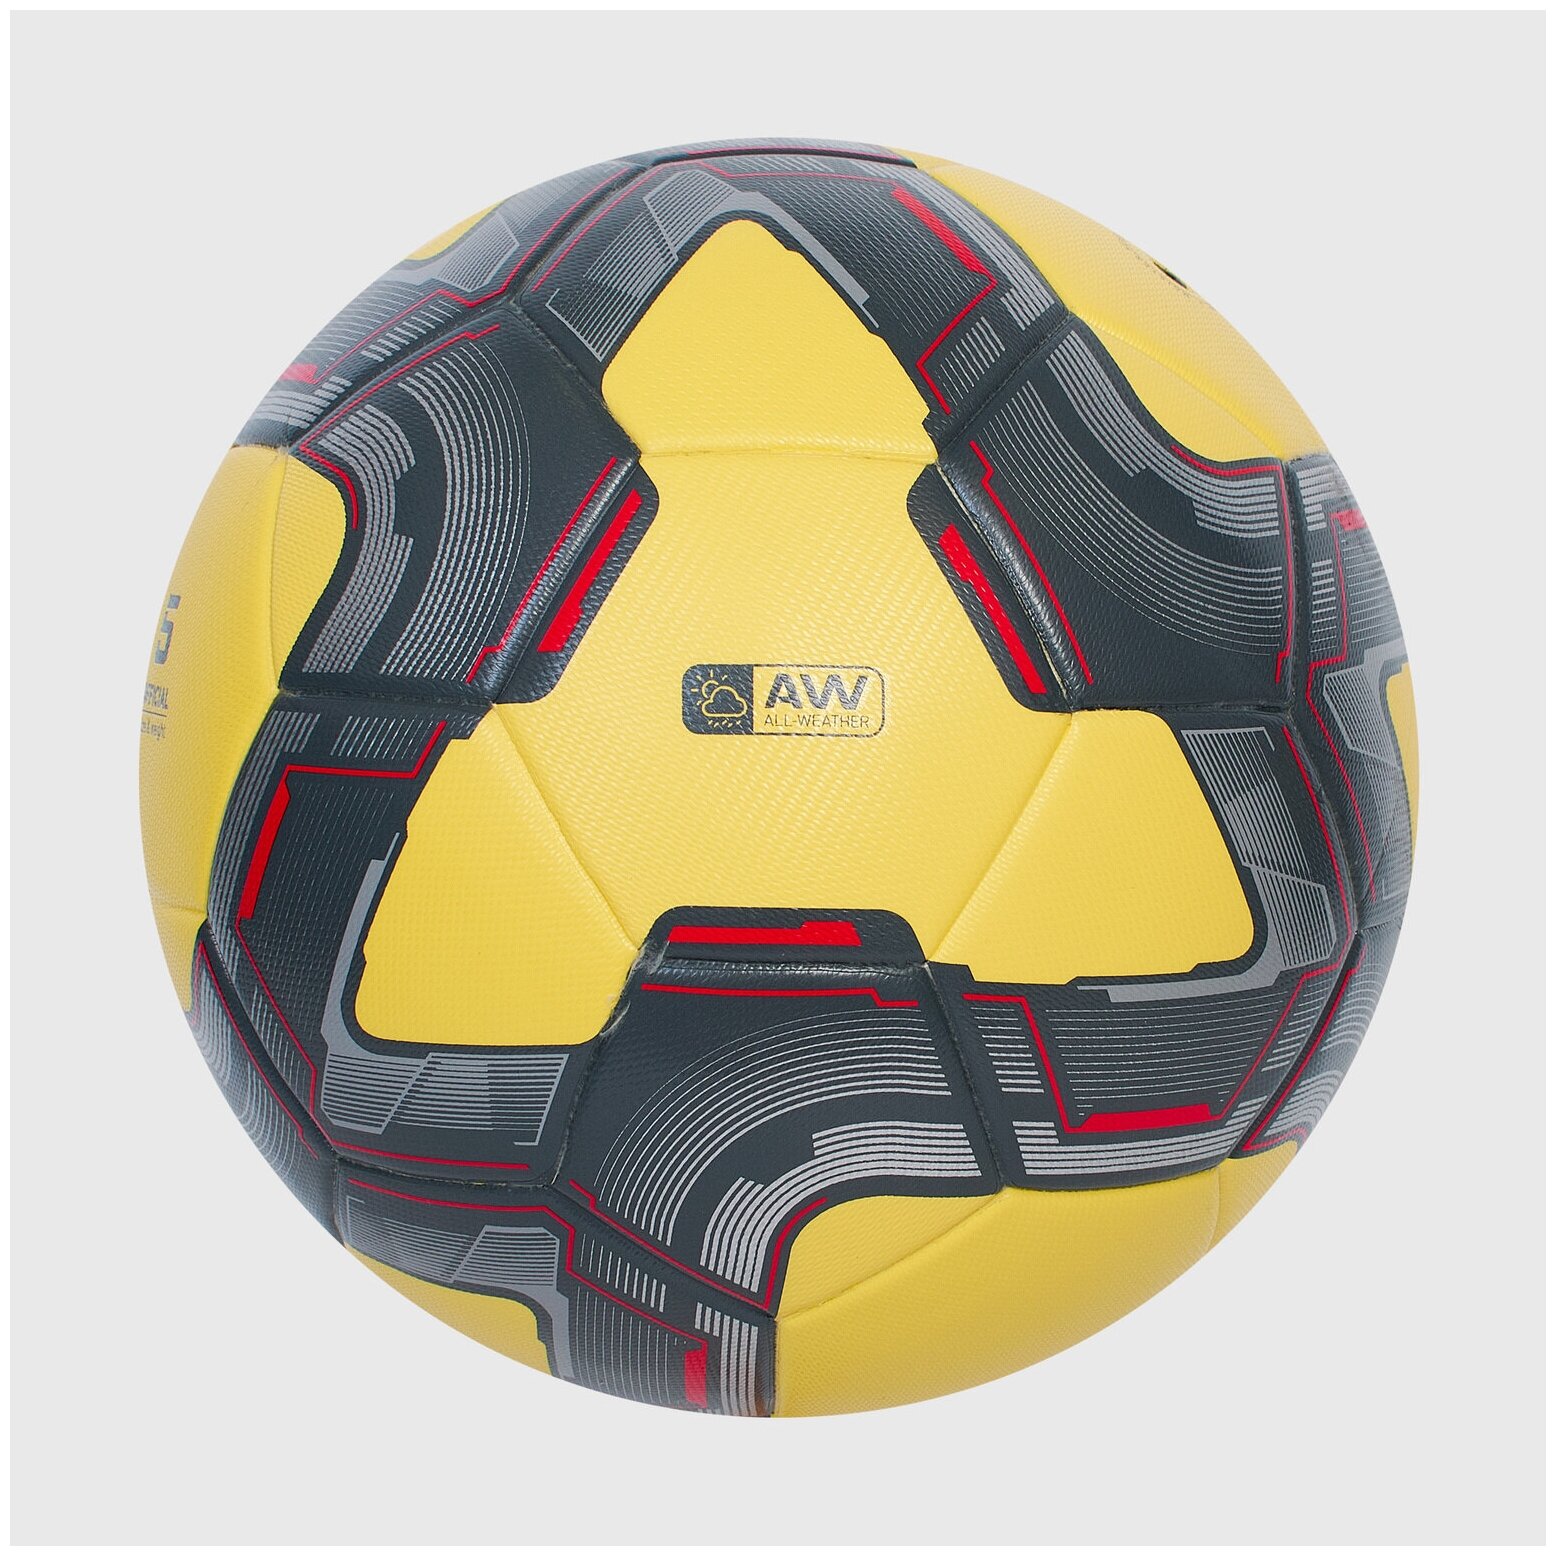 Мяч футбольный Jögel Grand №5 желтый